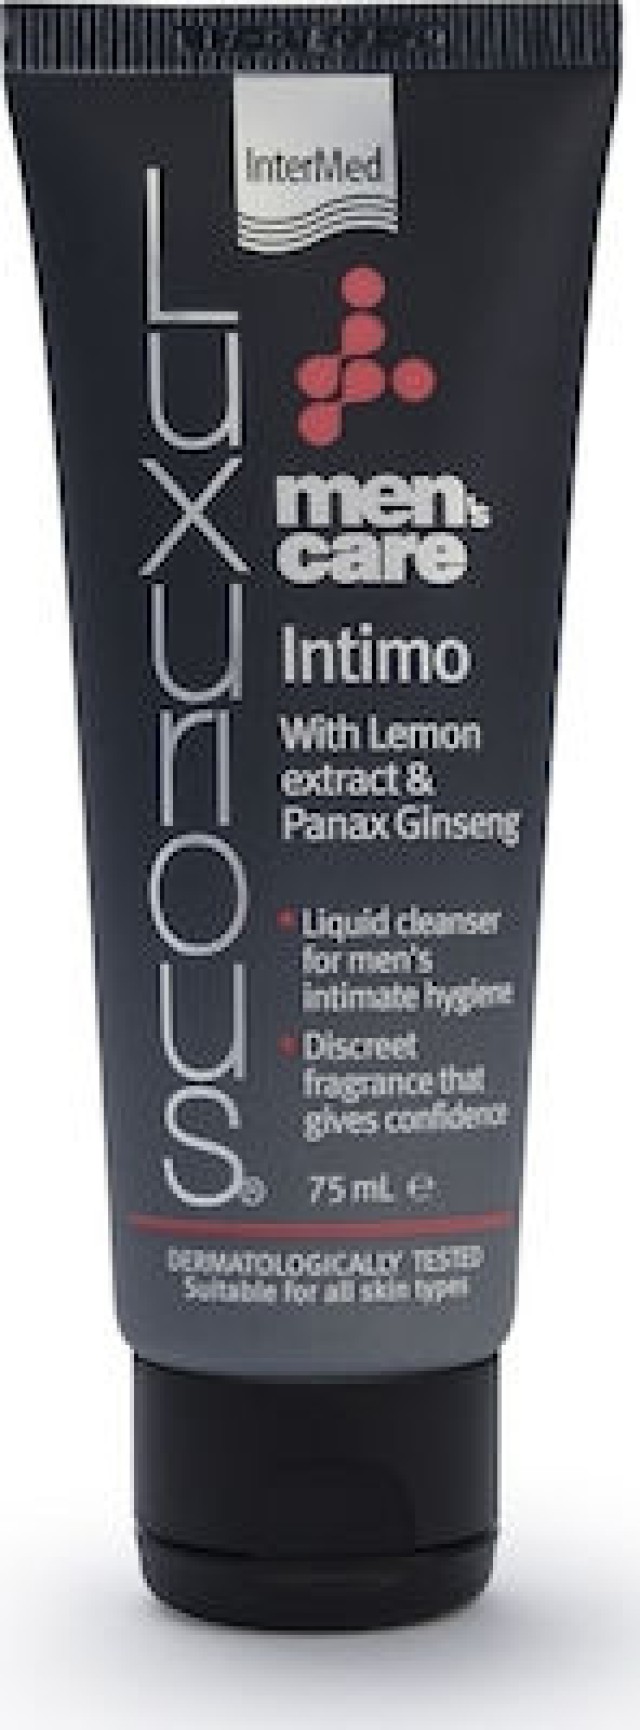 Intermed Luxurious Mens Care Intimo With Lemon Extract & Panax Ginseng Υγρό Καθαριστικό Για Τη Φροντίδα Της Γενετήσιας Περιοχής Του Άντρα 75ml